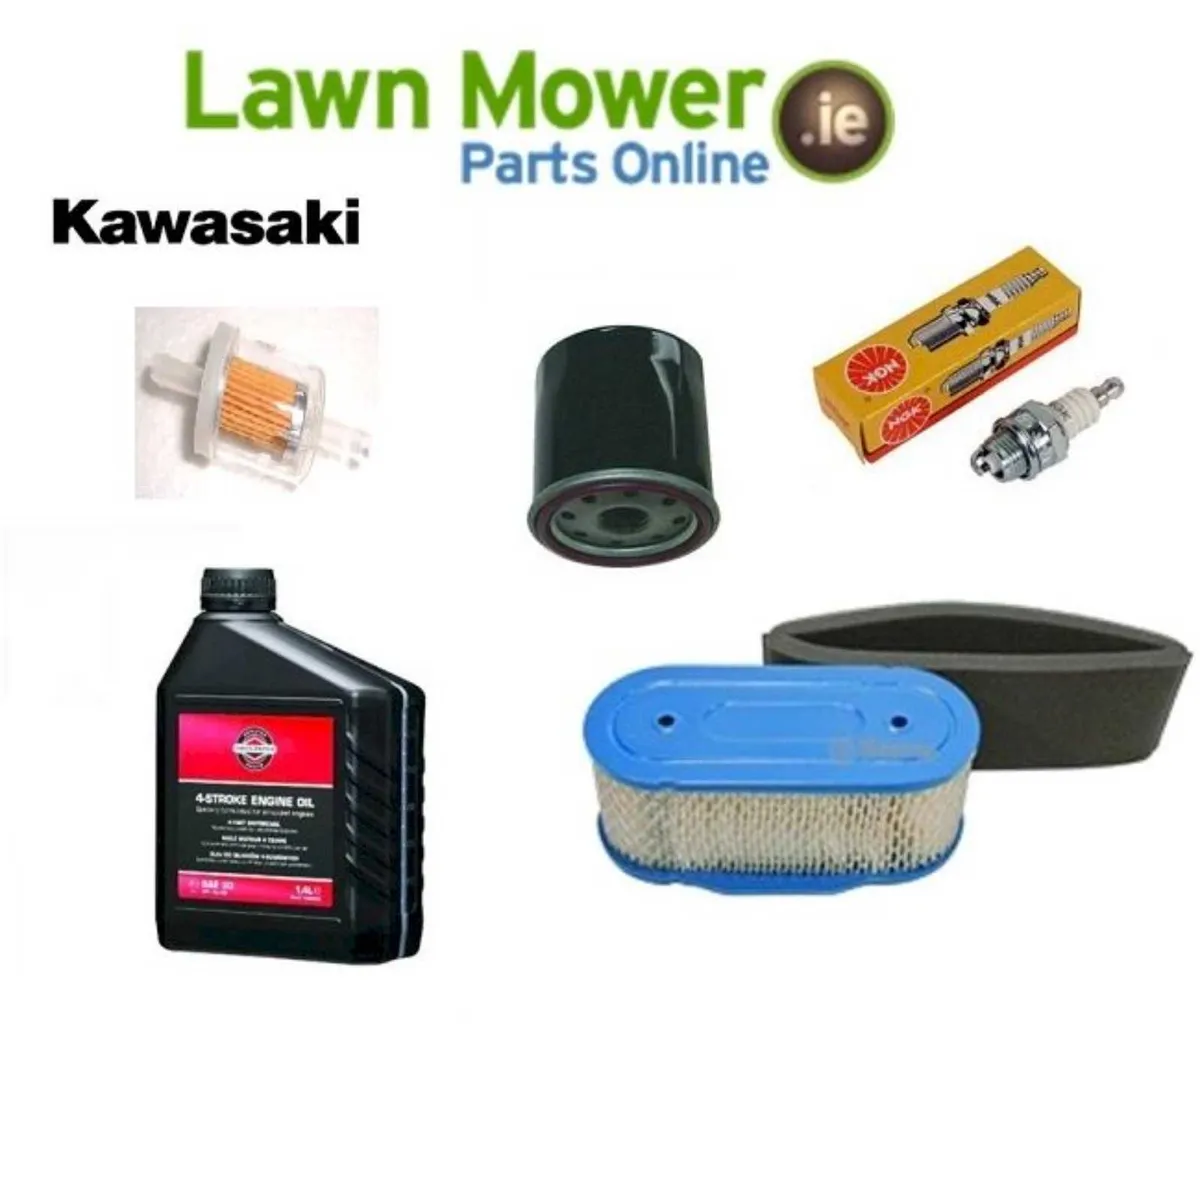 Kawasaki Service Kits for mowers-FREE DELIVERY